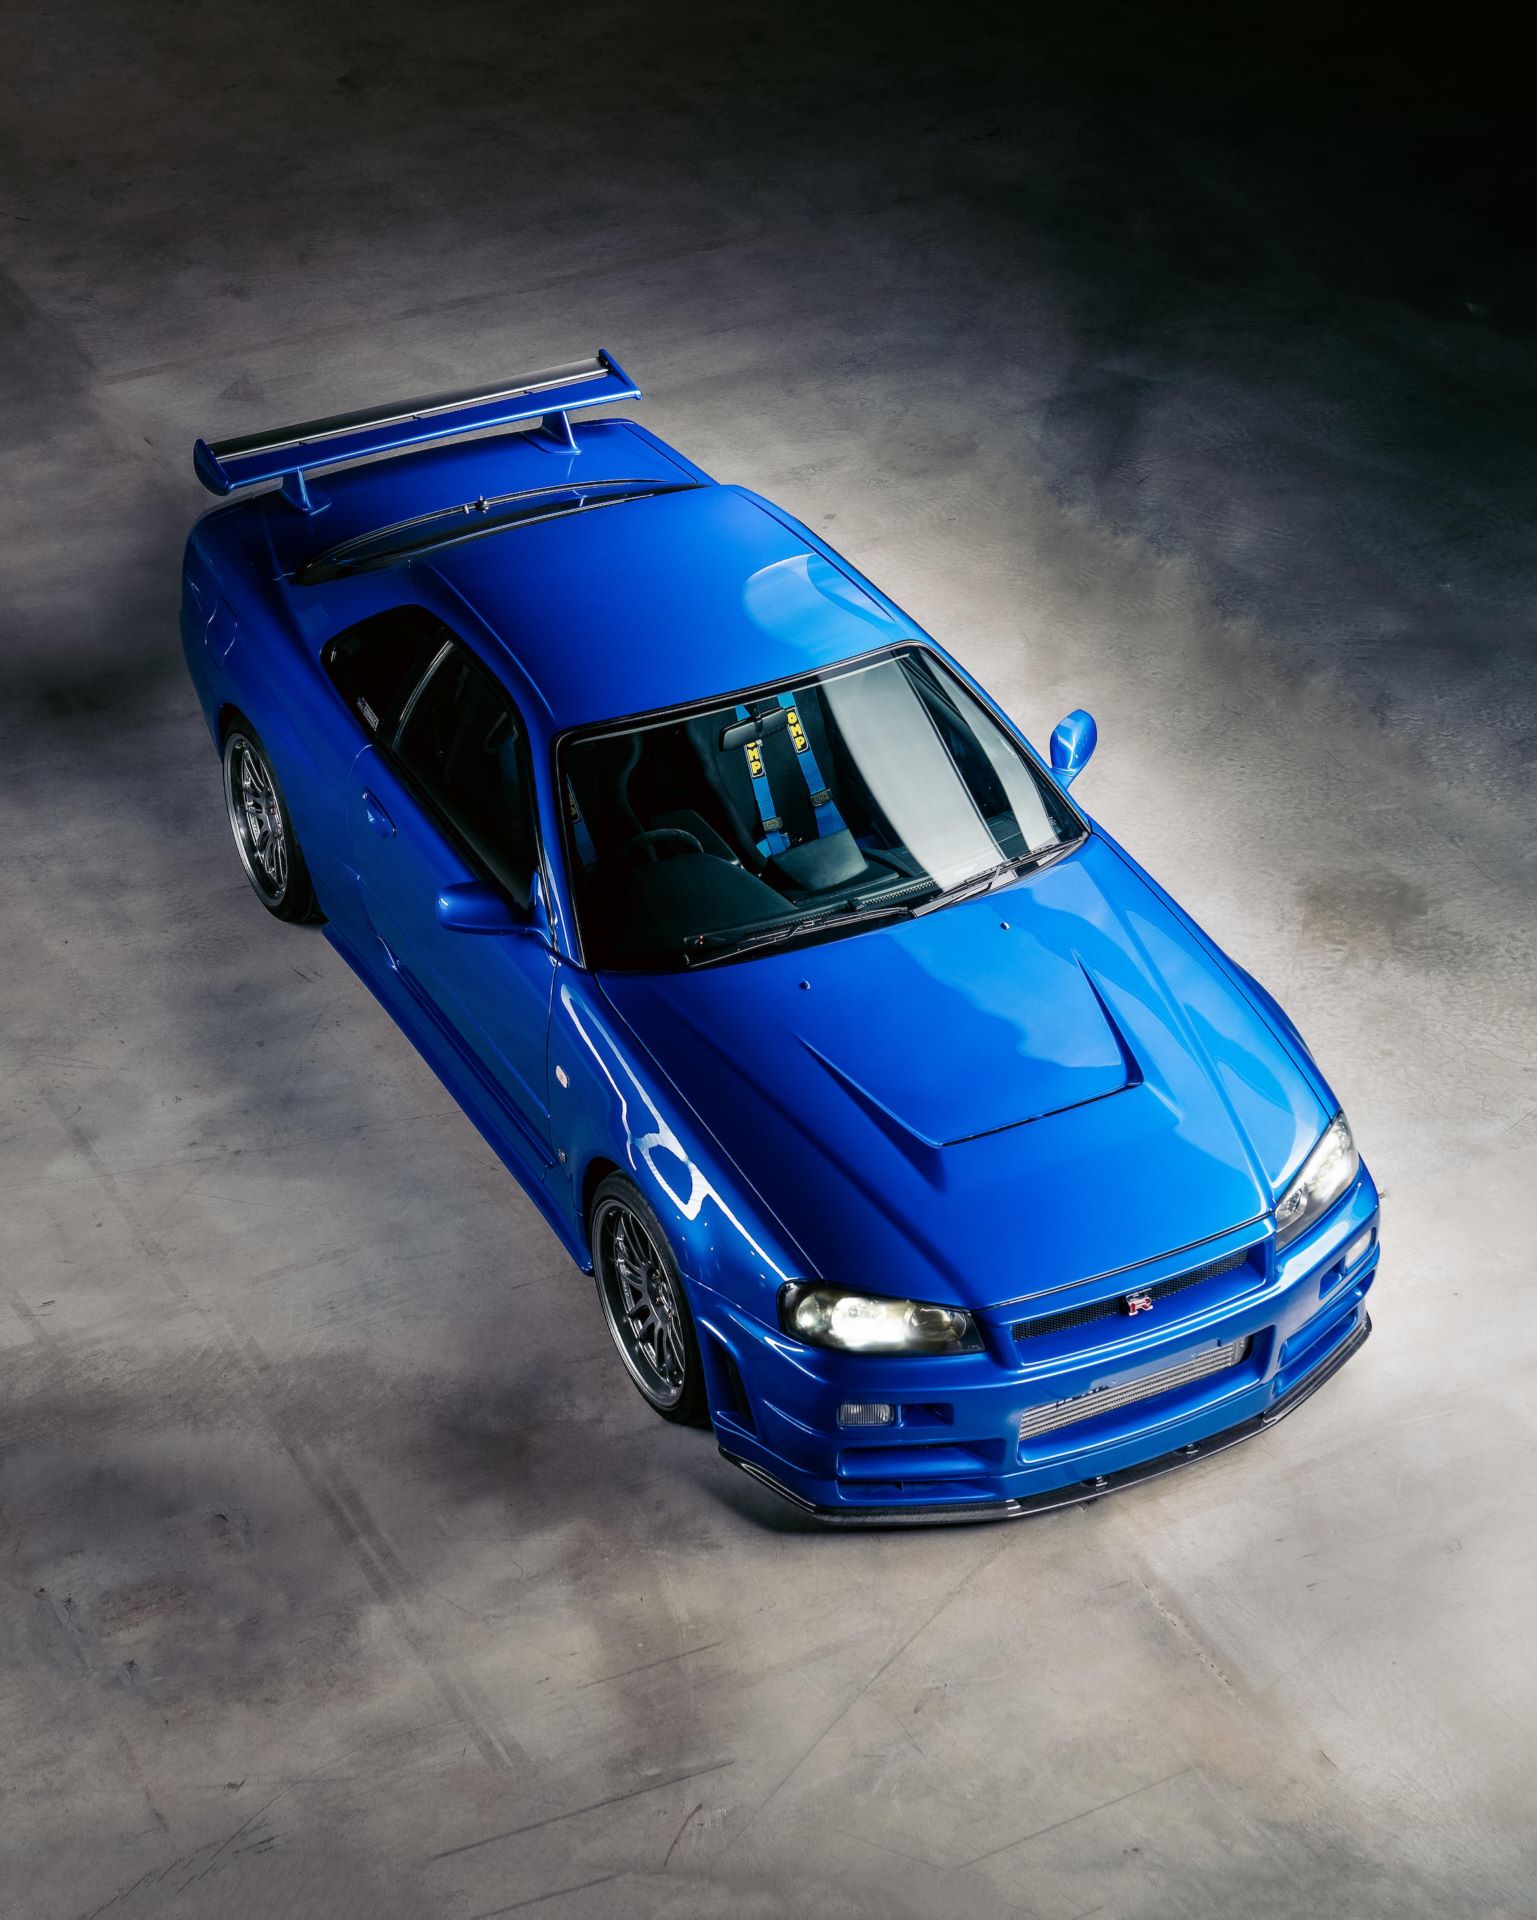 Nissan-Skyline-R34-GT-R-Paul-Walker-Fast-and-Furious-auction-20